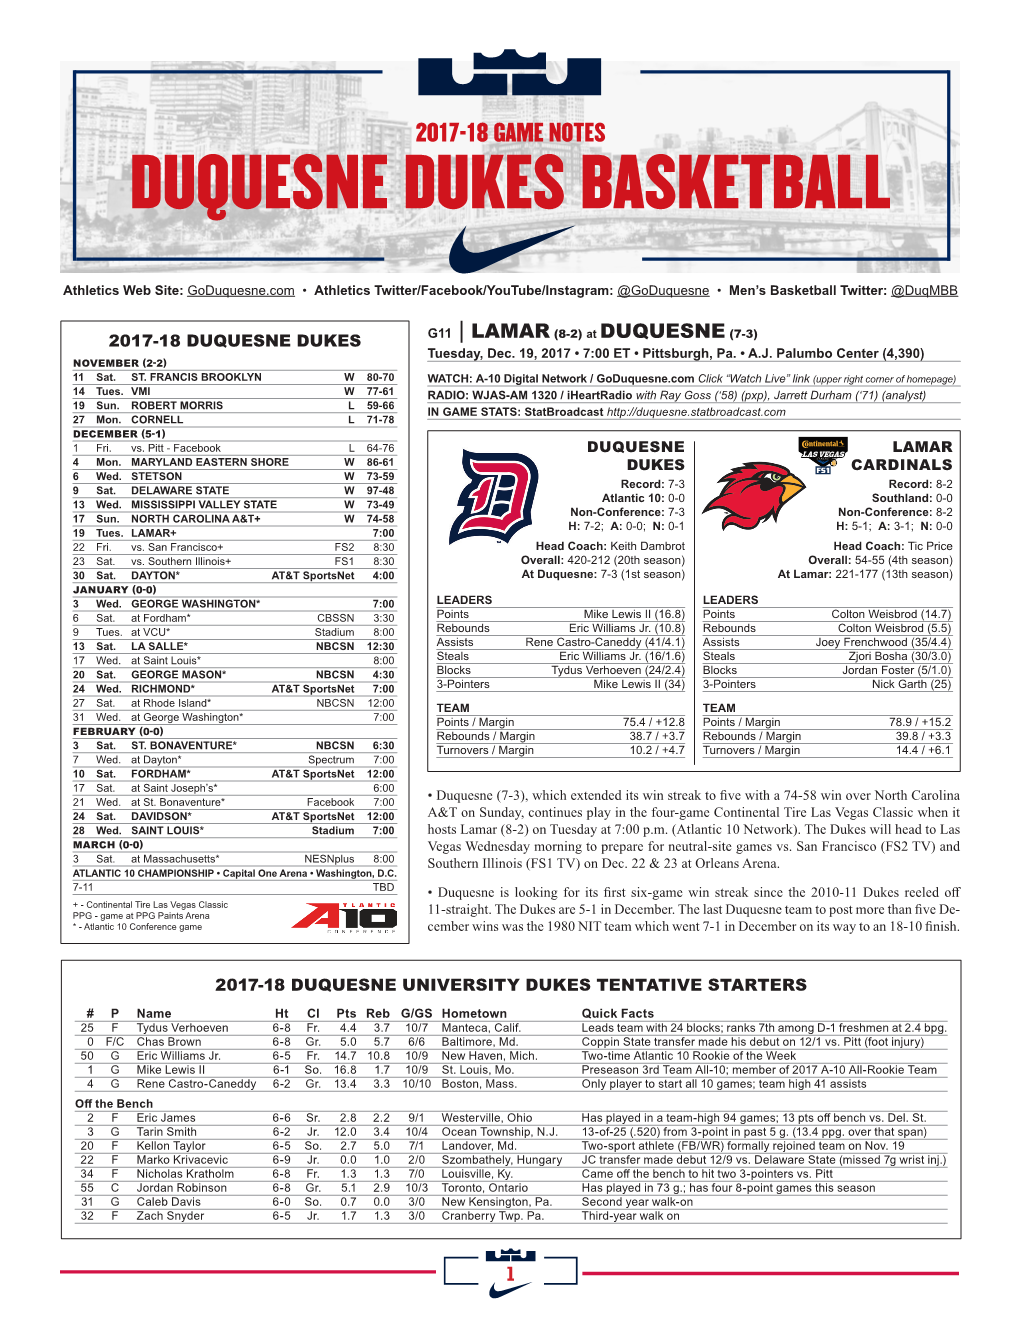 Duquesne Dukes Basketball